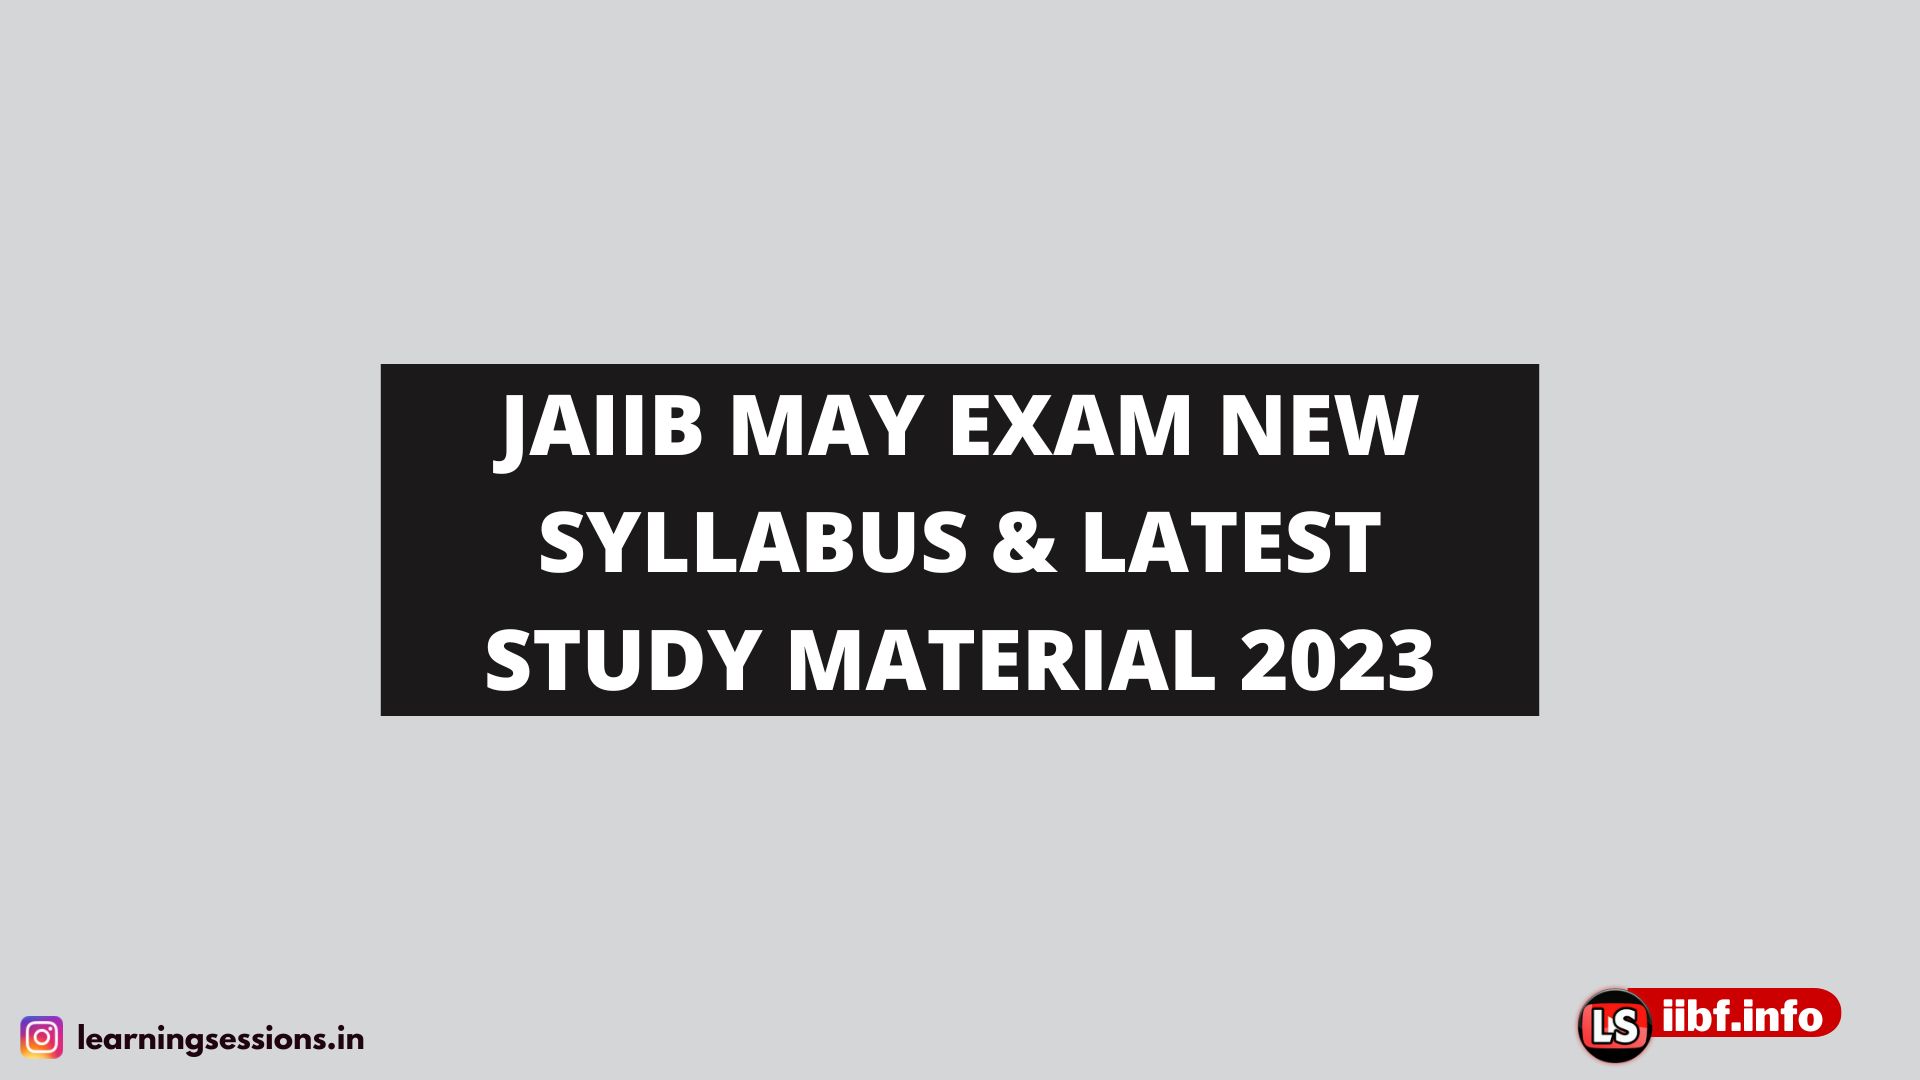 JAIIB MAY EXAM NEW SYLLABUS & LATEST STUDY MATERIAL 2023